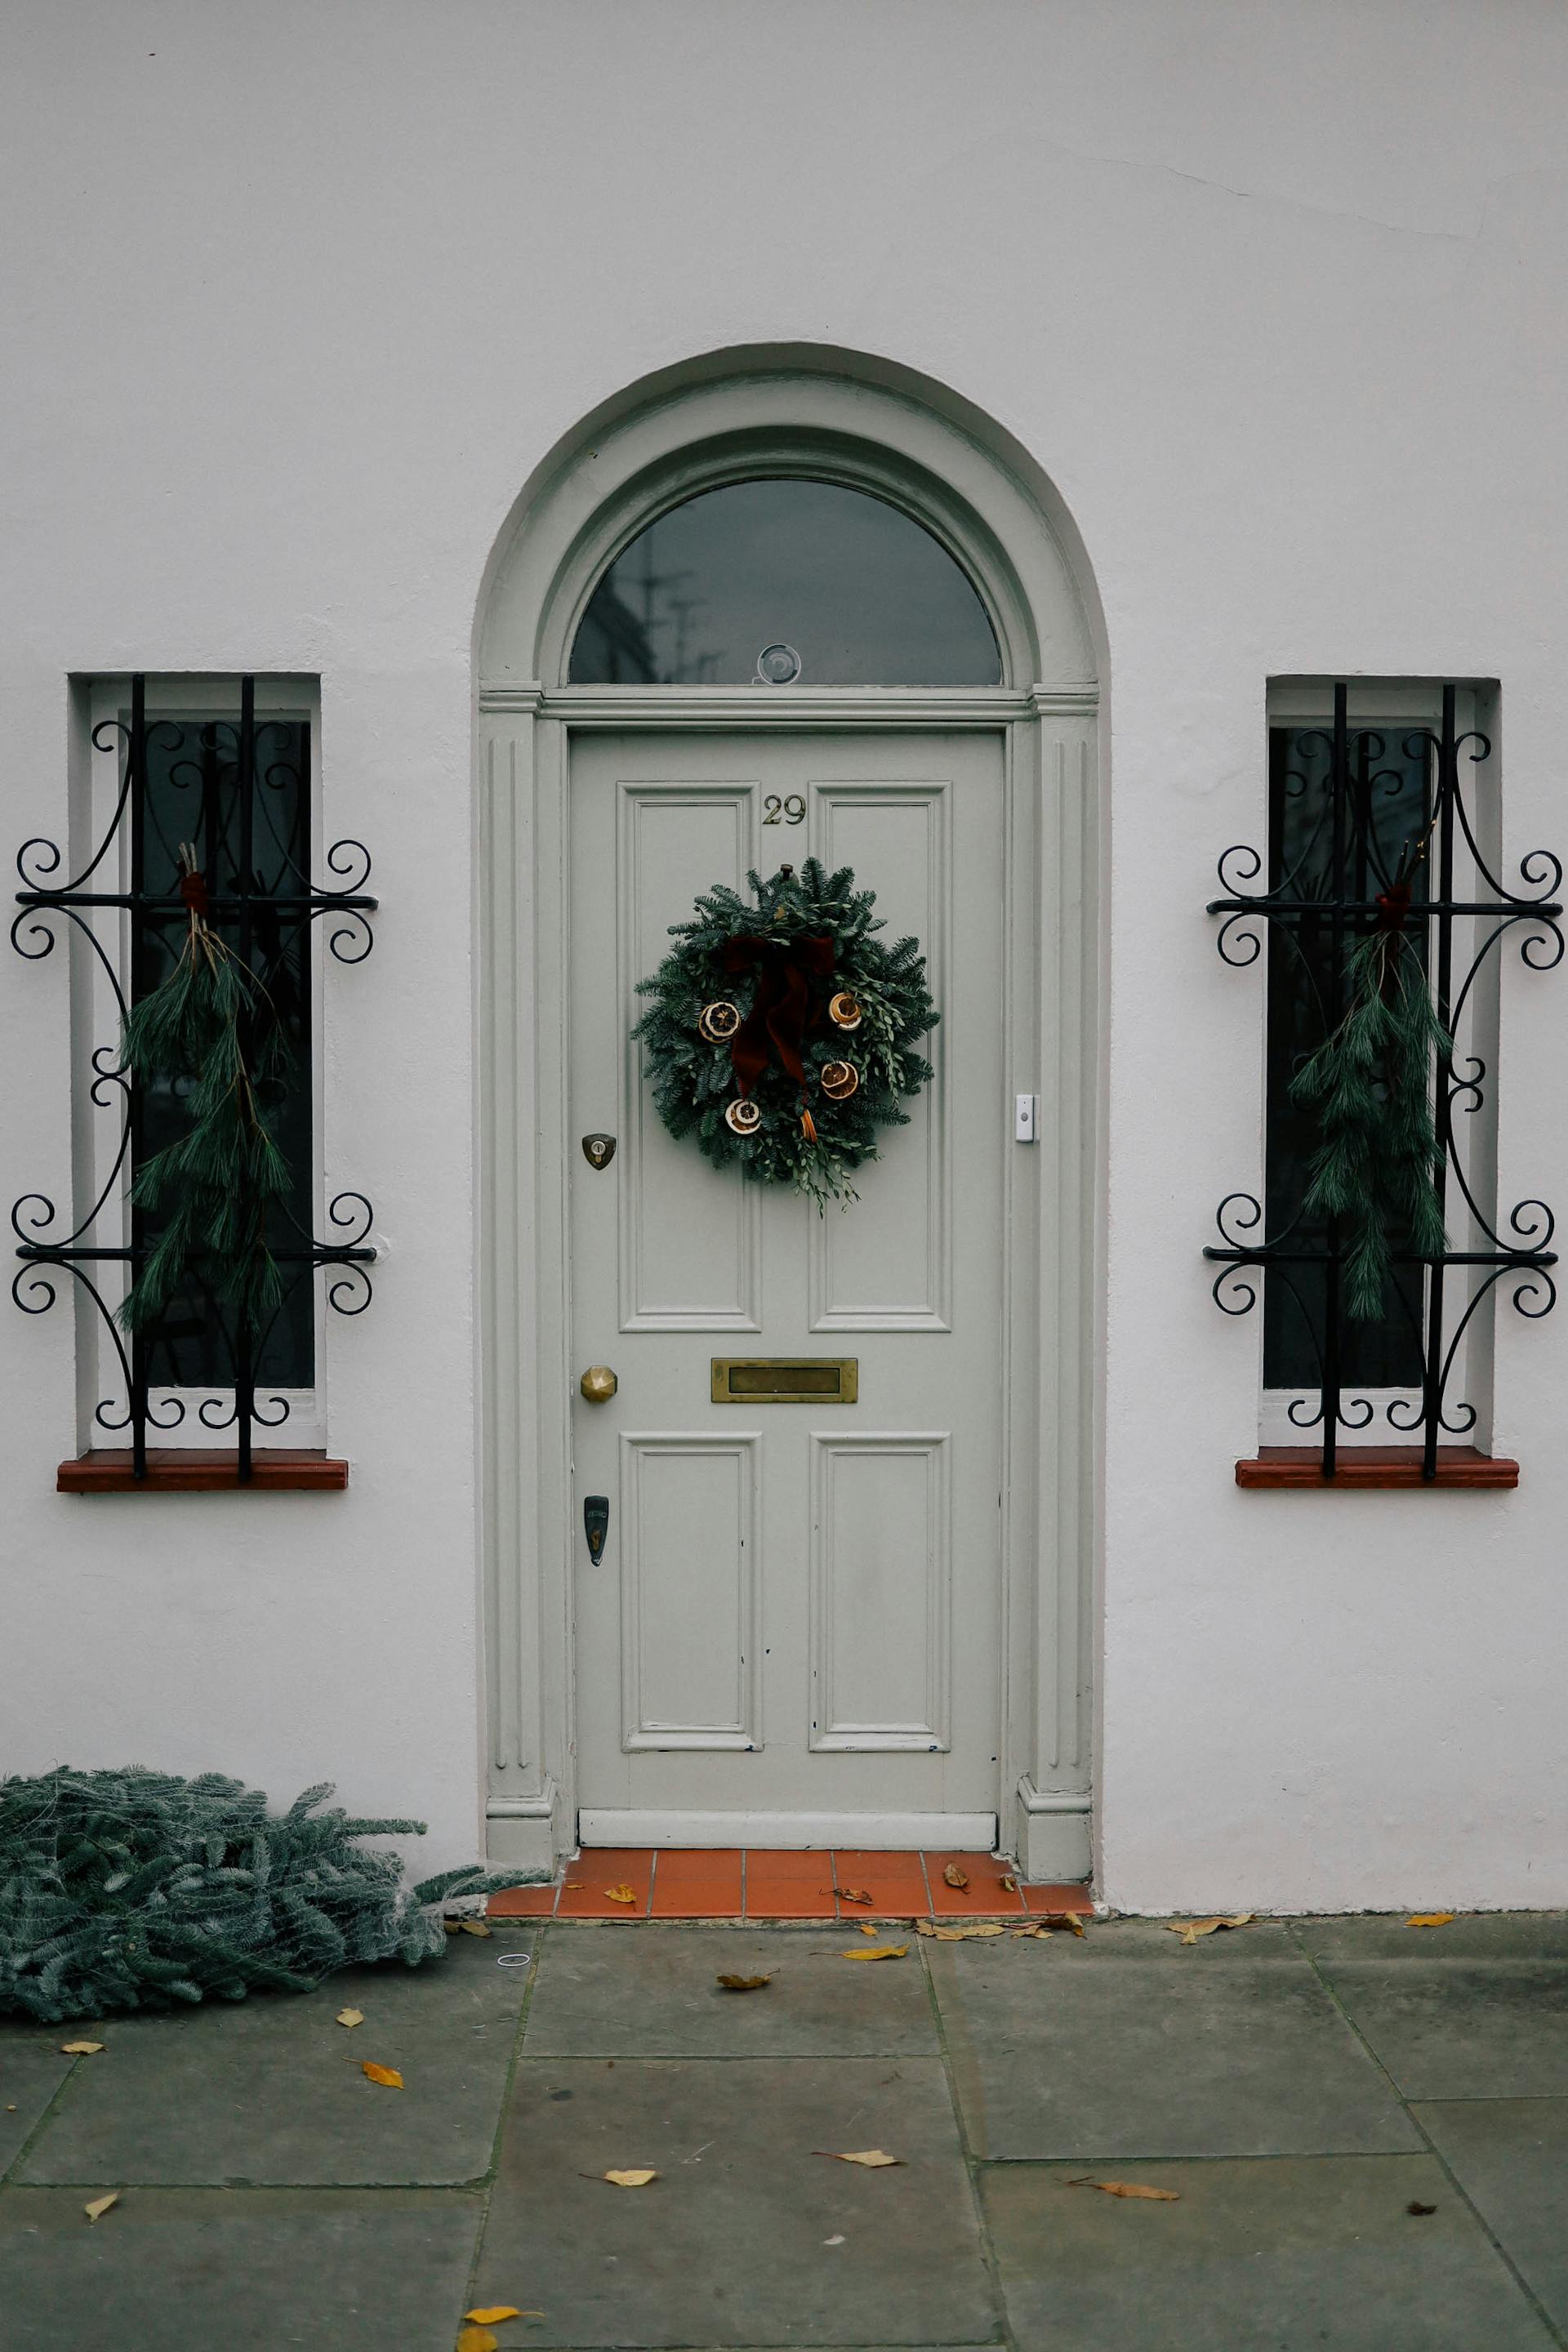 The front door of a house | Source: Pexels